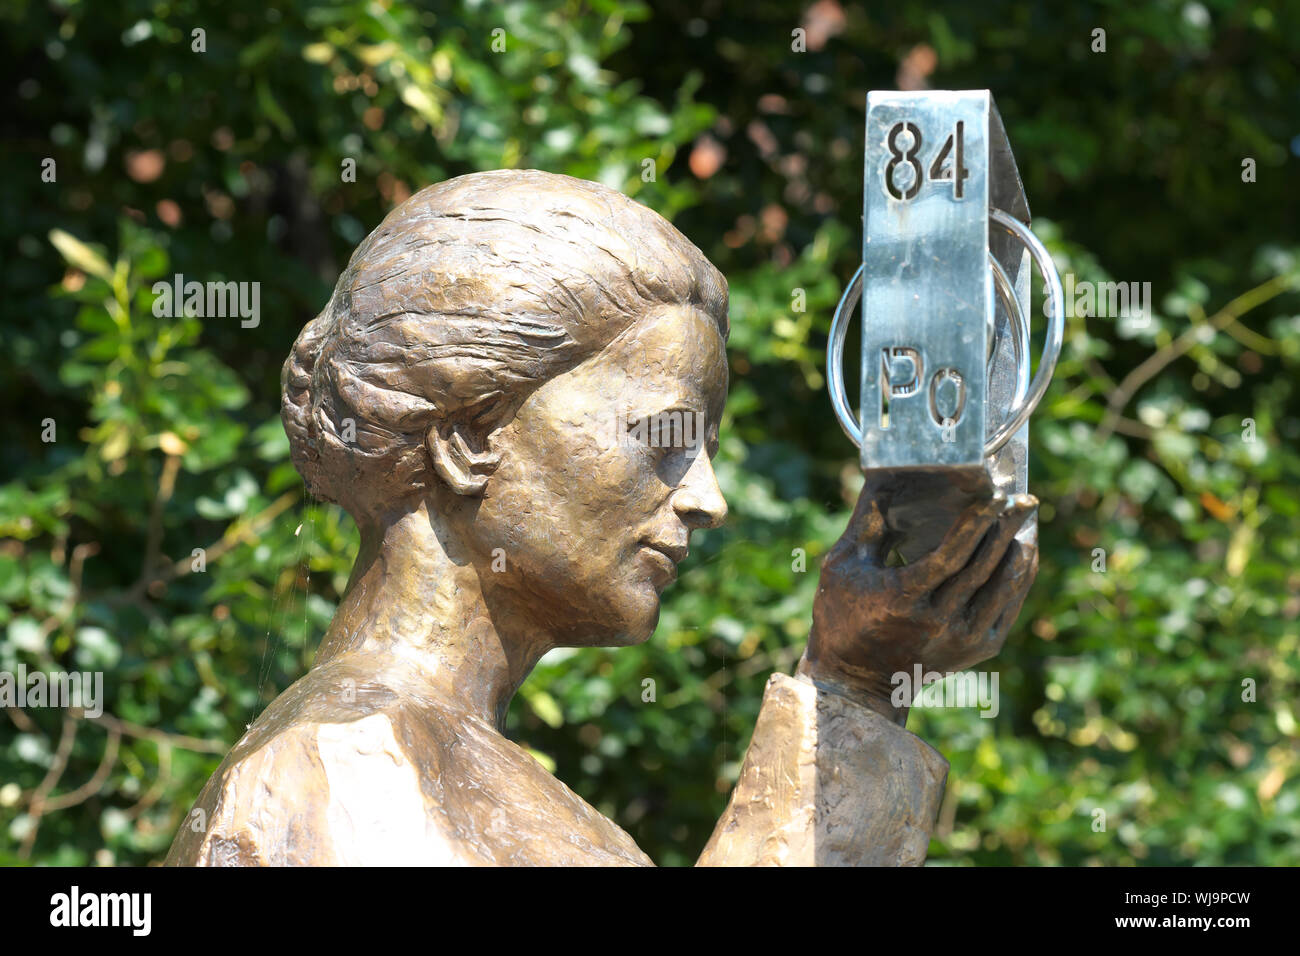 Warsaw Poland statue of Polish scientist Marie Sklodowska Curie holding a model of a Polonium atom by artist Bronislaw Krzysztof Stock Photo